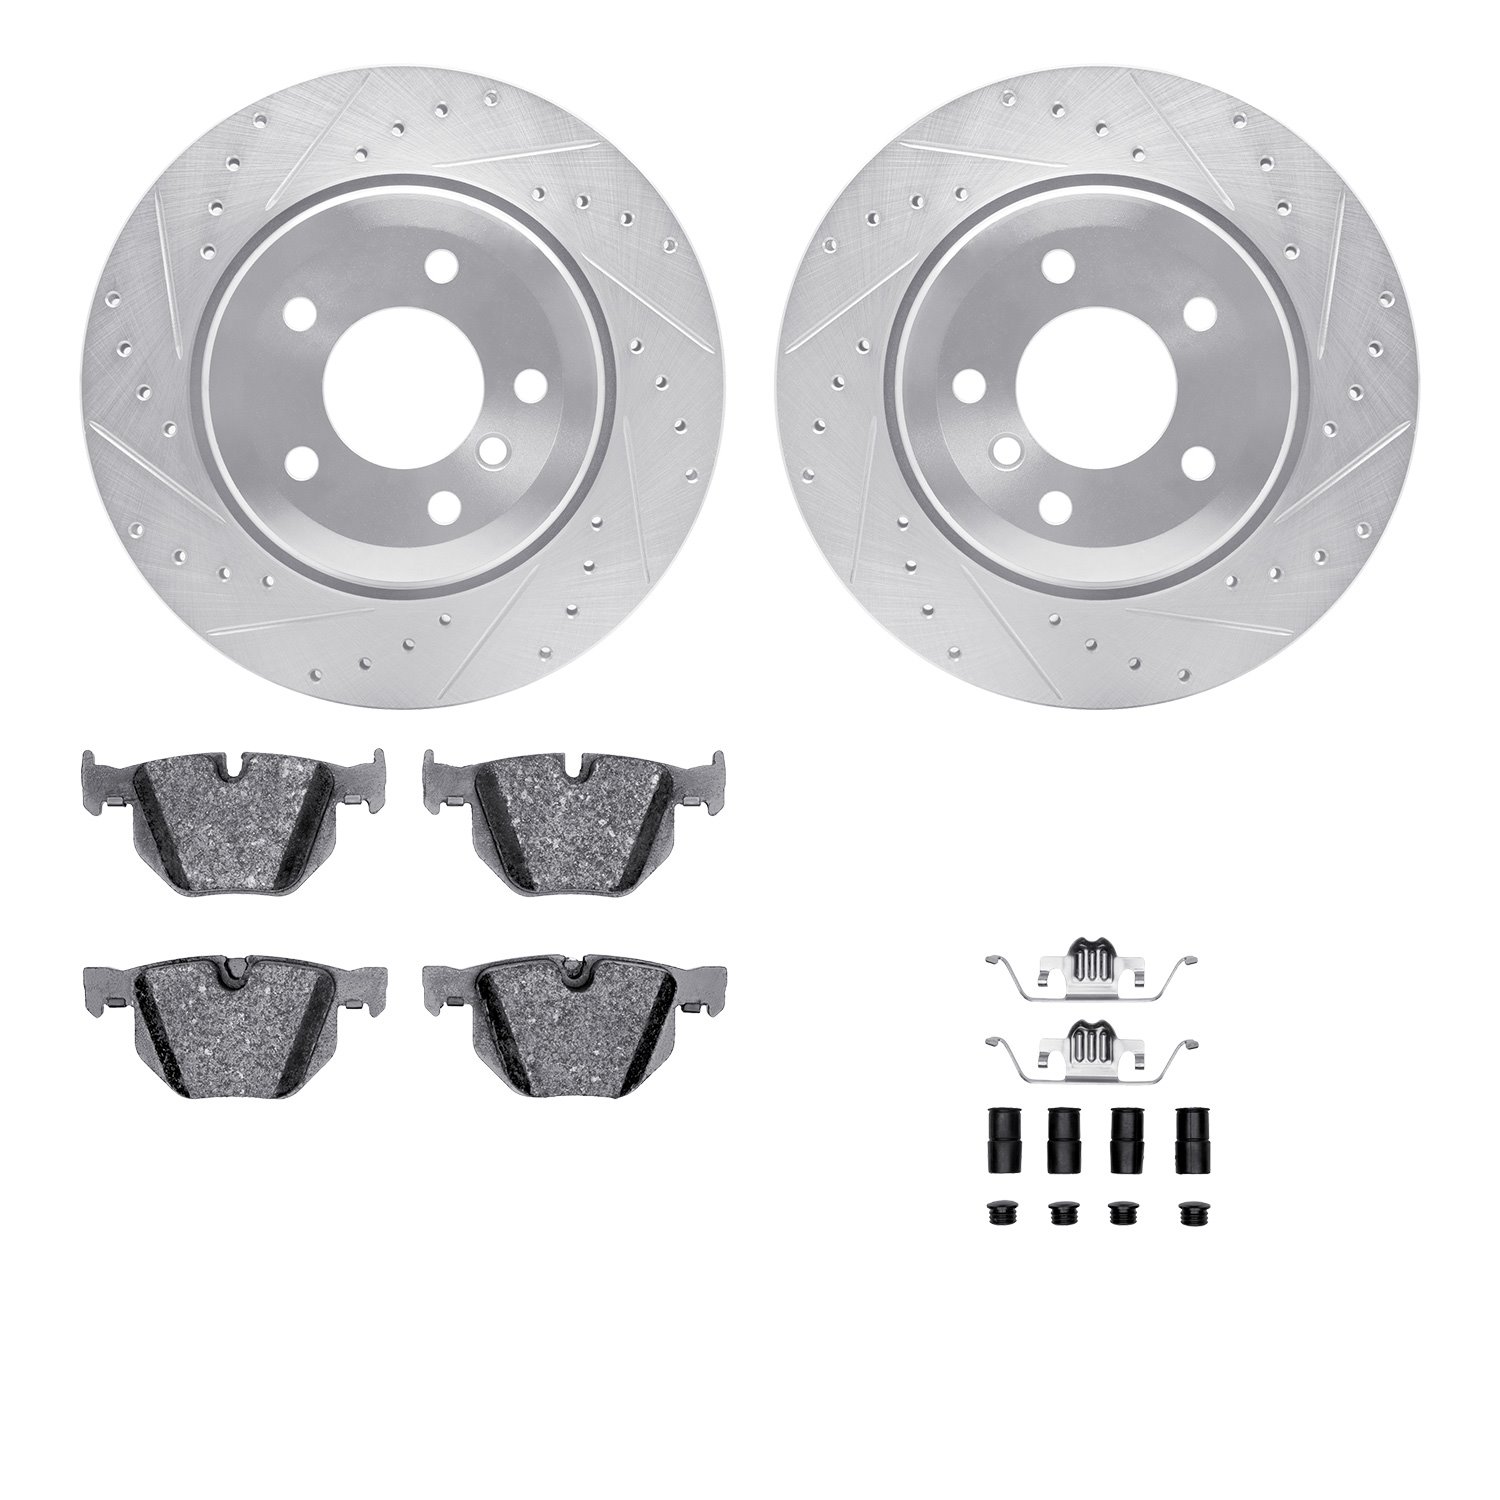 7612-31062 Drilled/Slotted Brake Rotors w/5000 Euro Ceramic Brake Pads Kit & Hardware [Silver], 2004-2010 BMW, Position: Rear